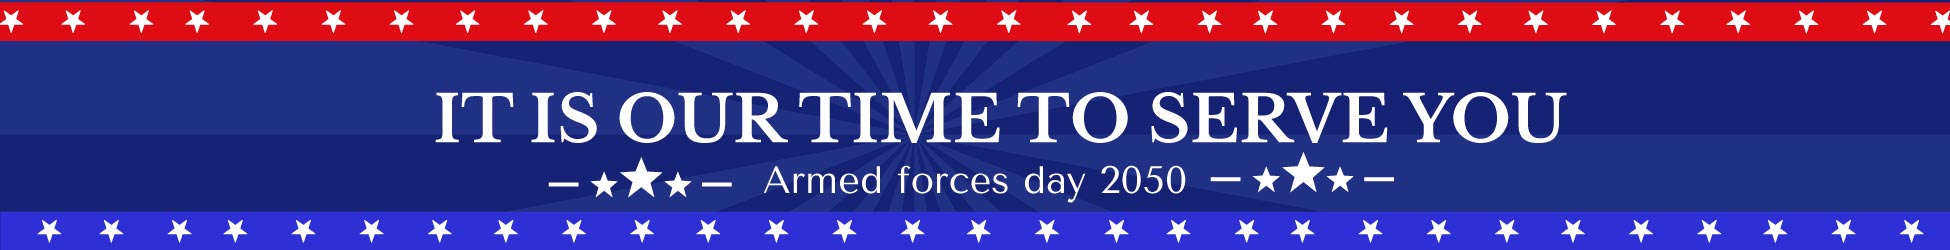 Free Armed Forces Day Website Banner in Illustrator, PSD, EPS, SVG, PNG, JPEG